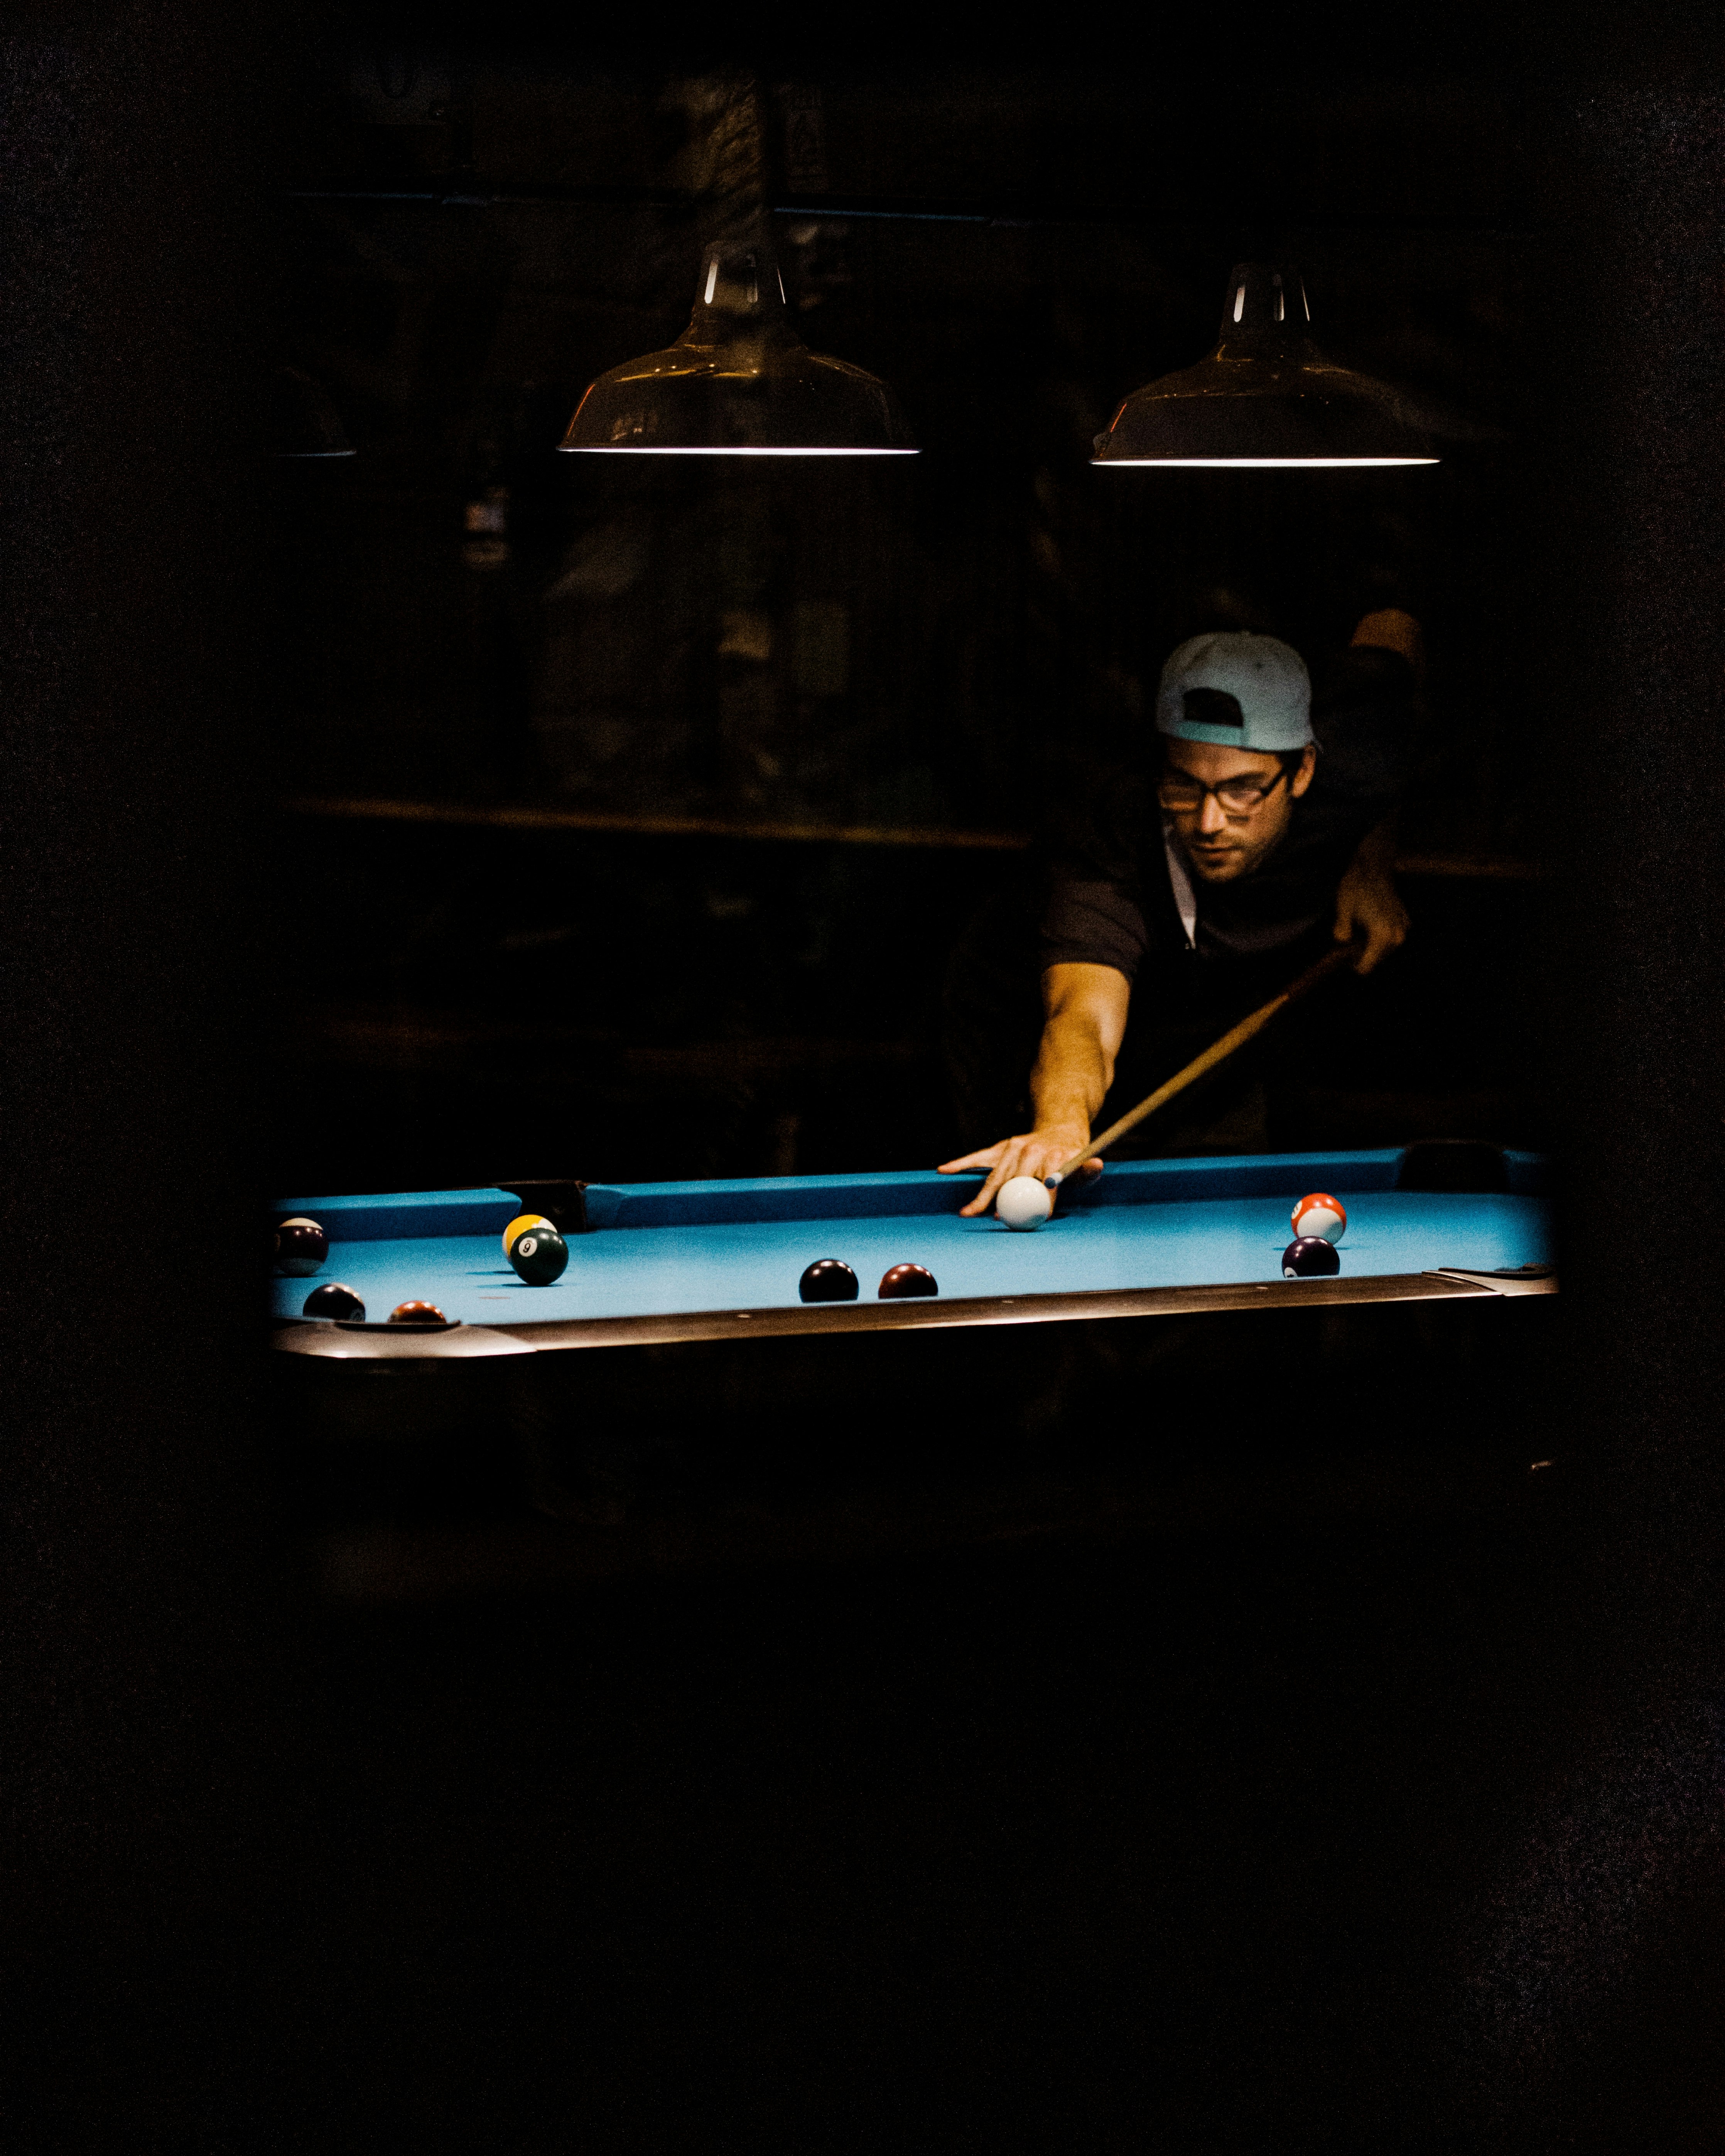 man in black t-shirt playing billiard